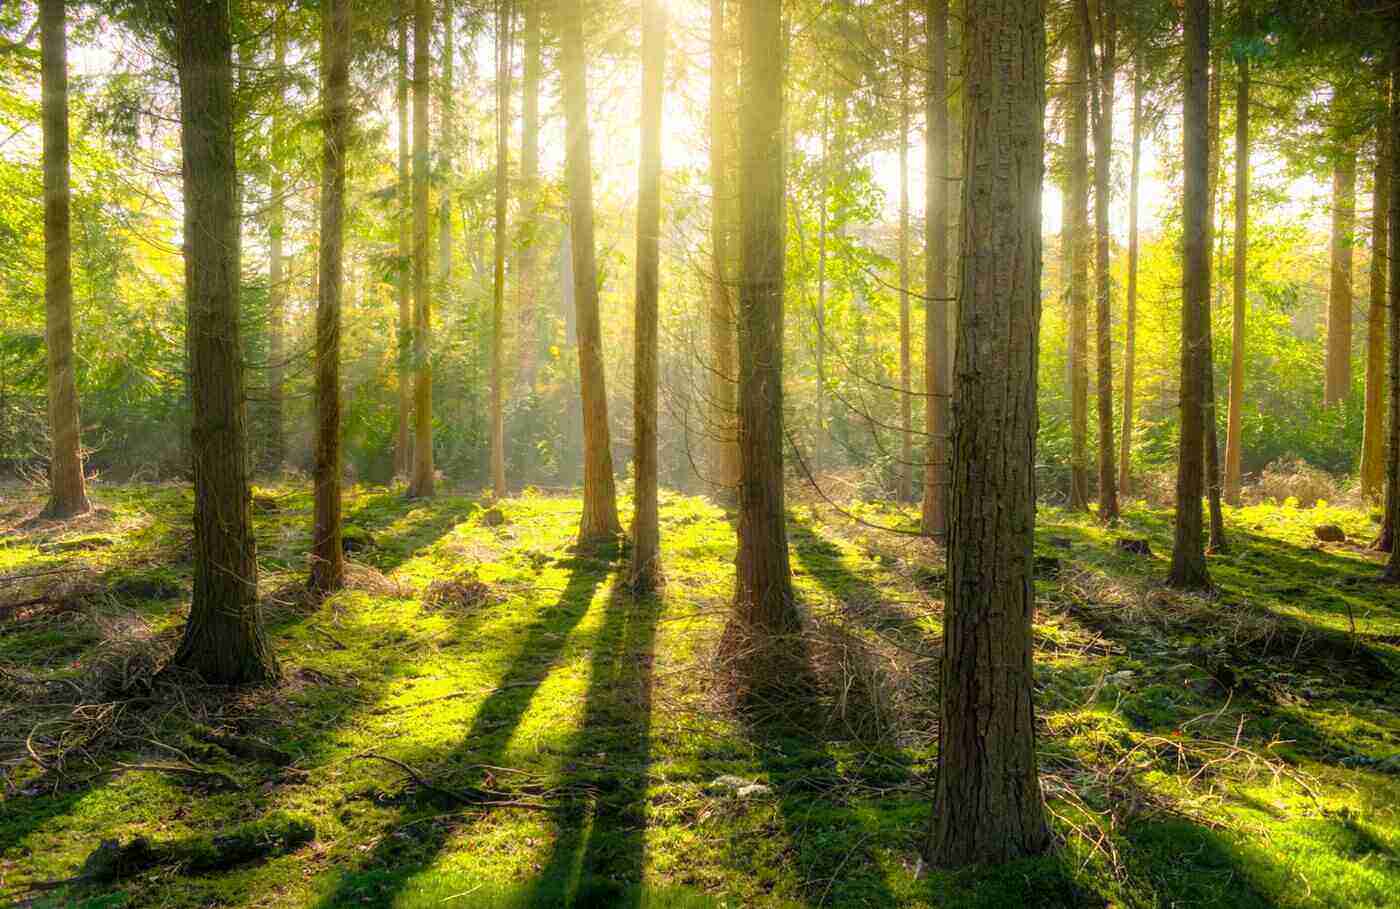 sunlight through trees - nanorods